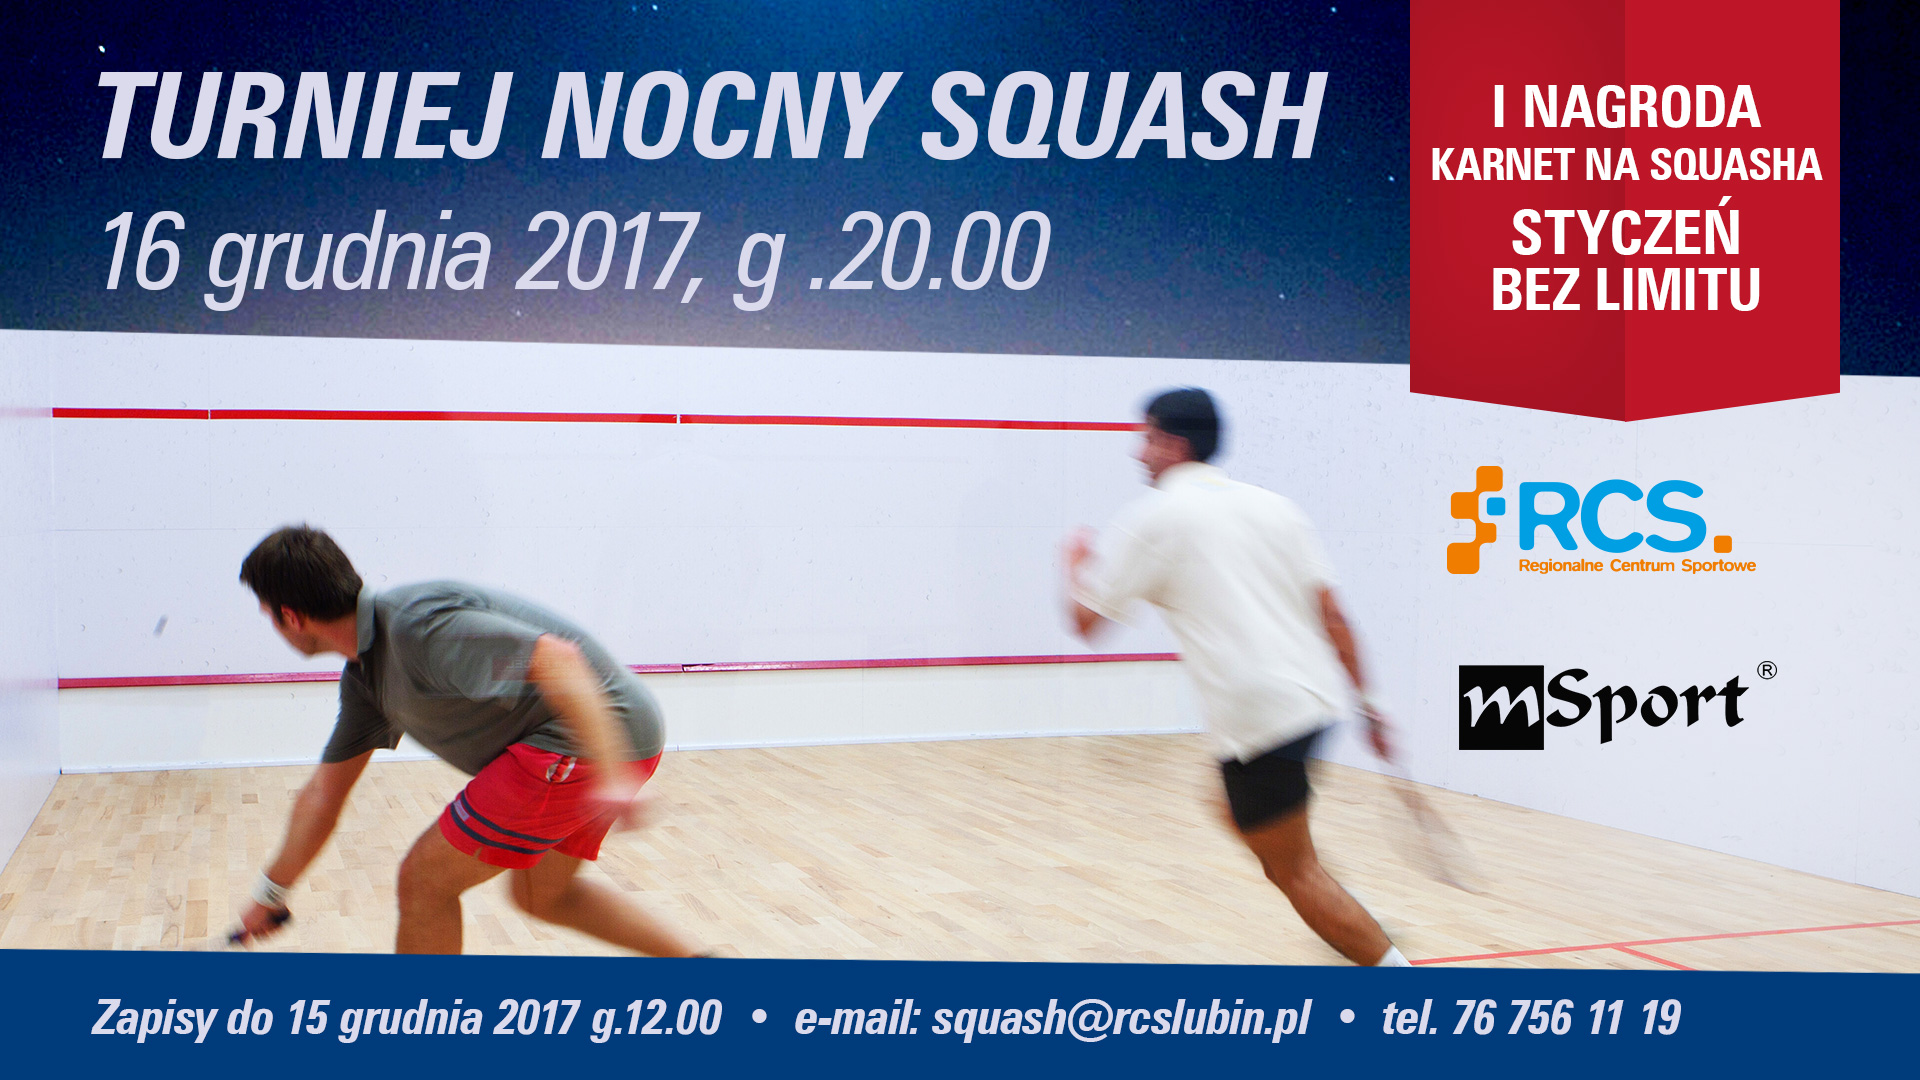 Nocny turniej squasha